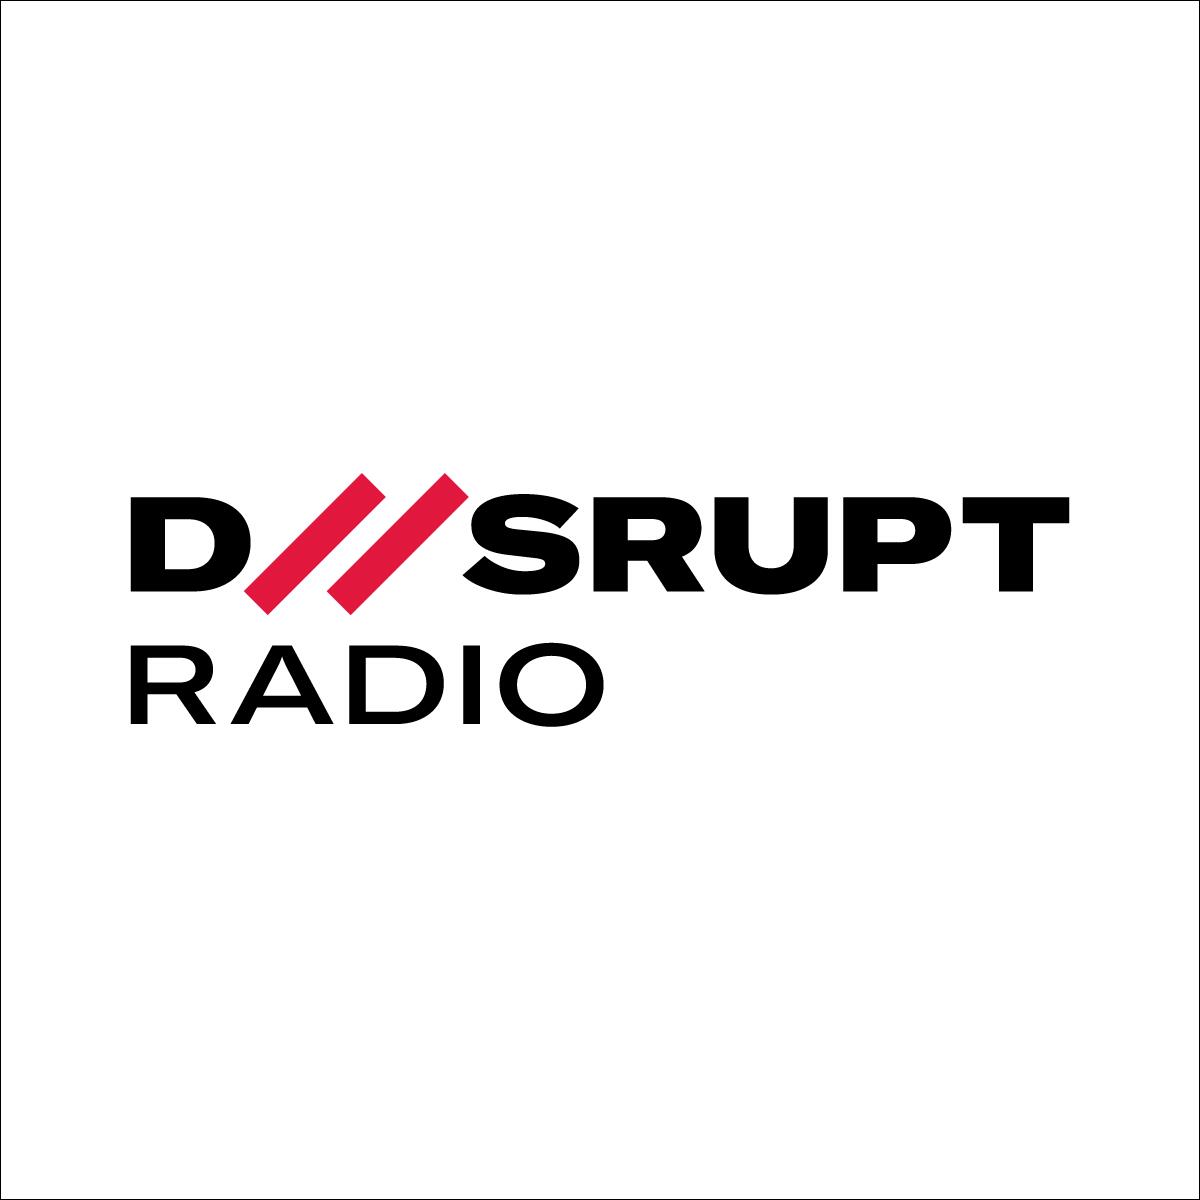 Disrupt Radio